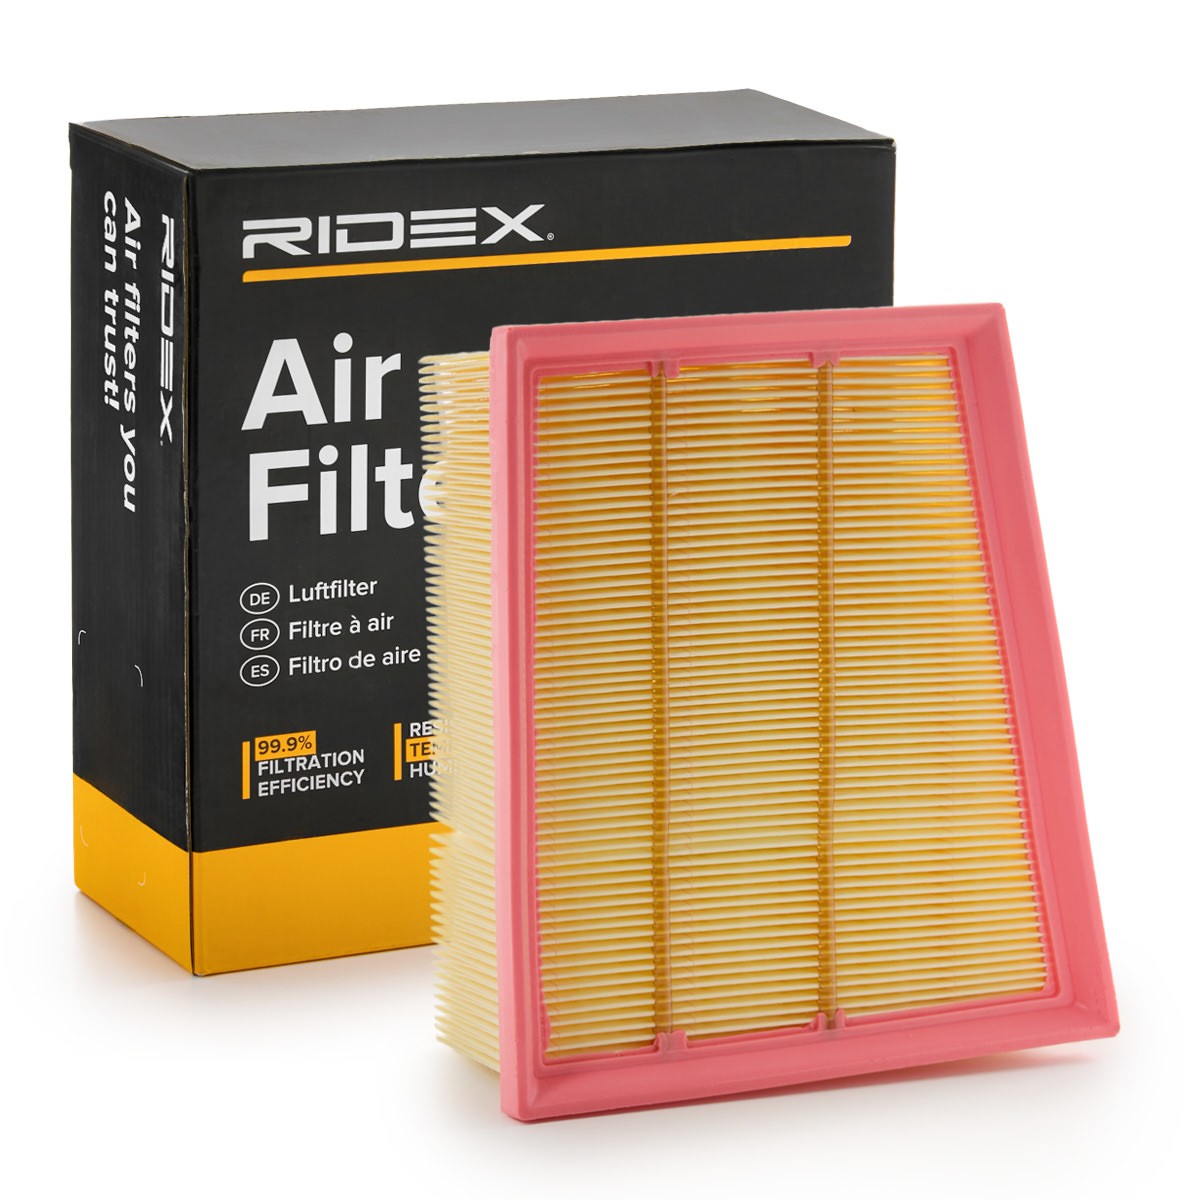 RIDEX 70mm, 192mm, 220mm, Filter Insert, Air Recirculation Filter Length: 220mm, Width: 192mm, Height: 70mm Engine air filter 8A1221 buy